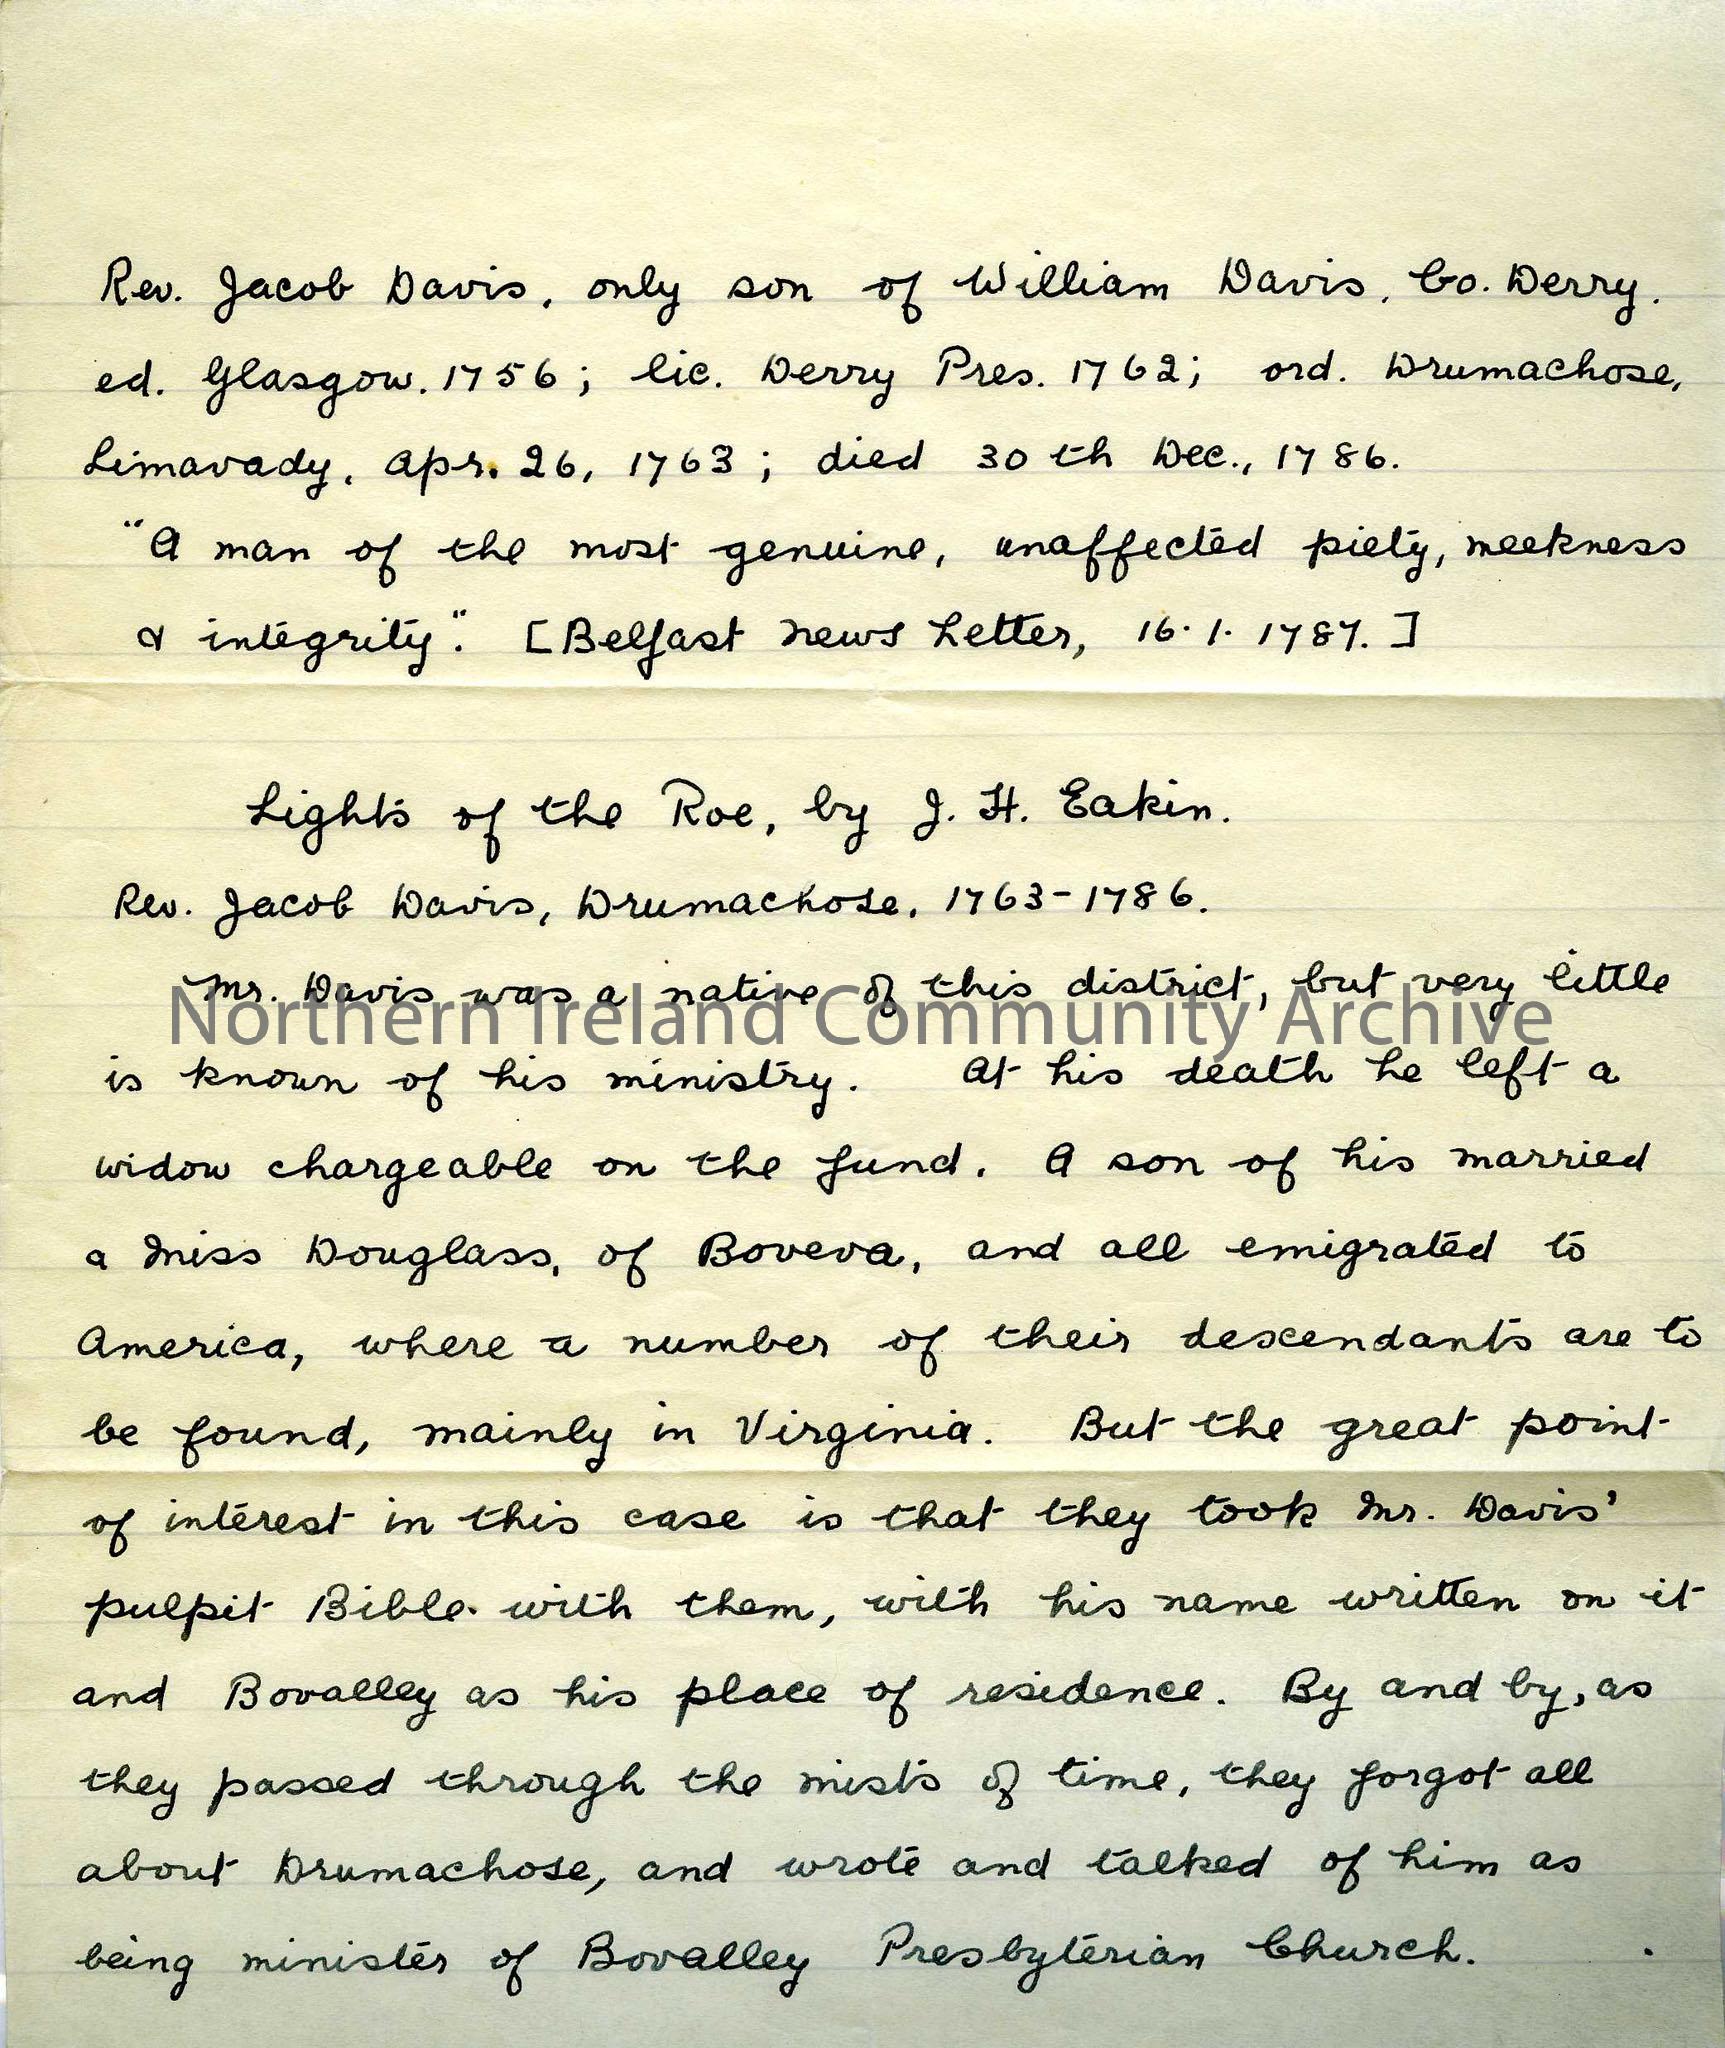 handwritten page – notes on a Rev Jacob Davis